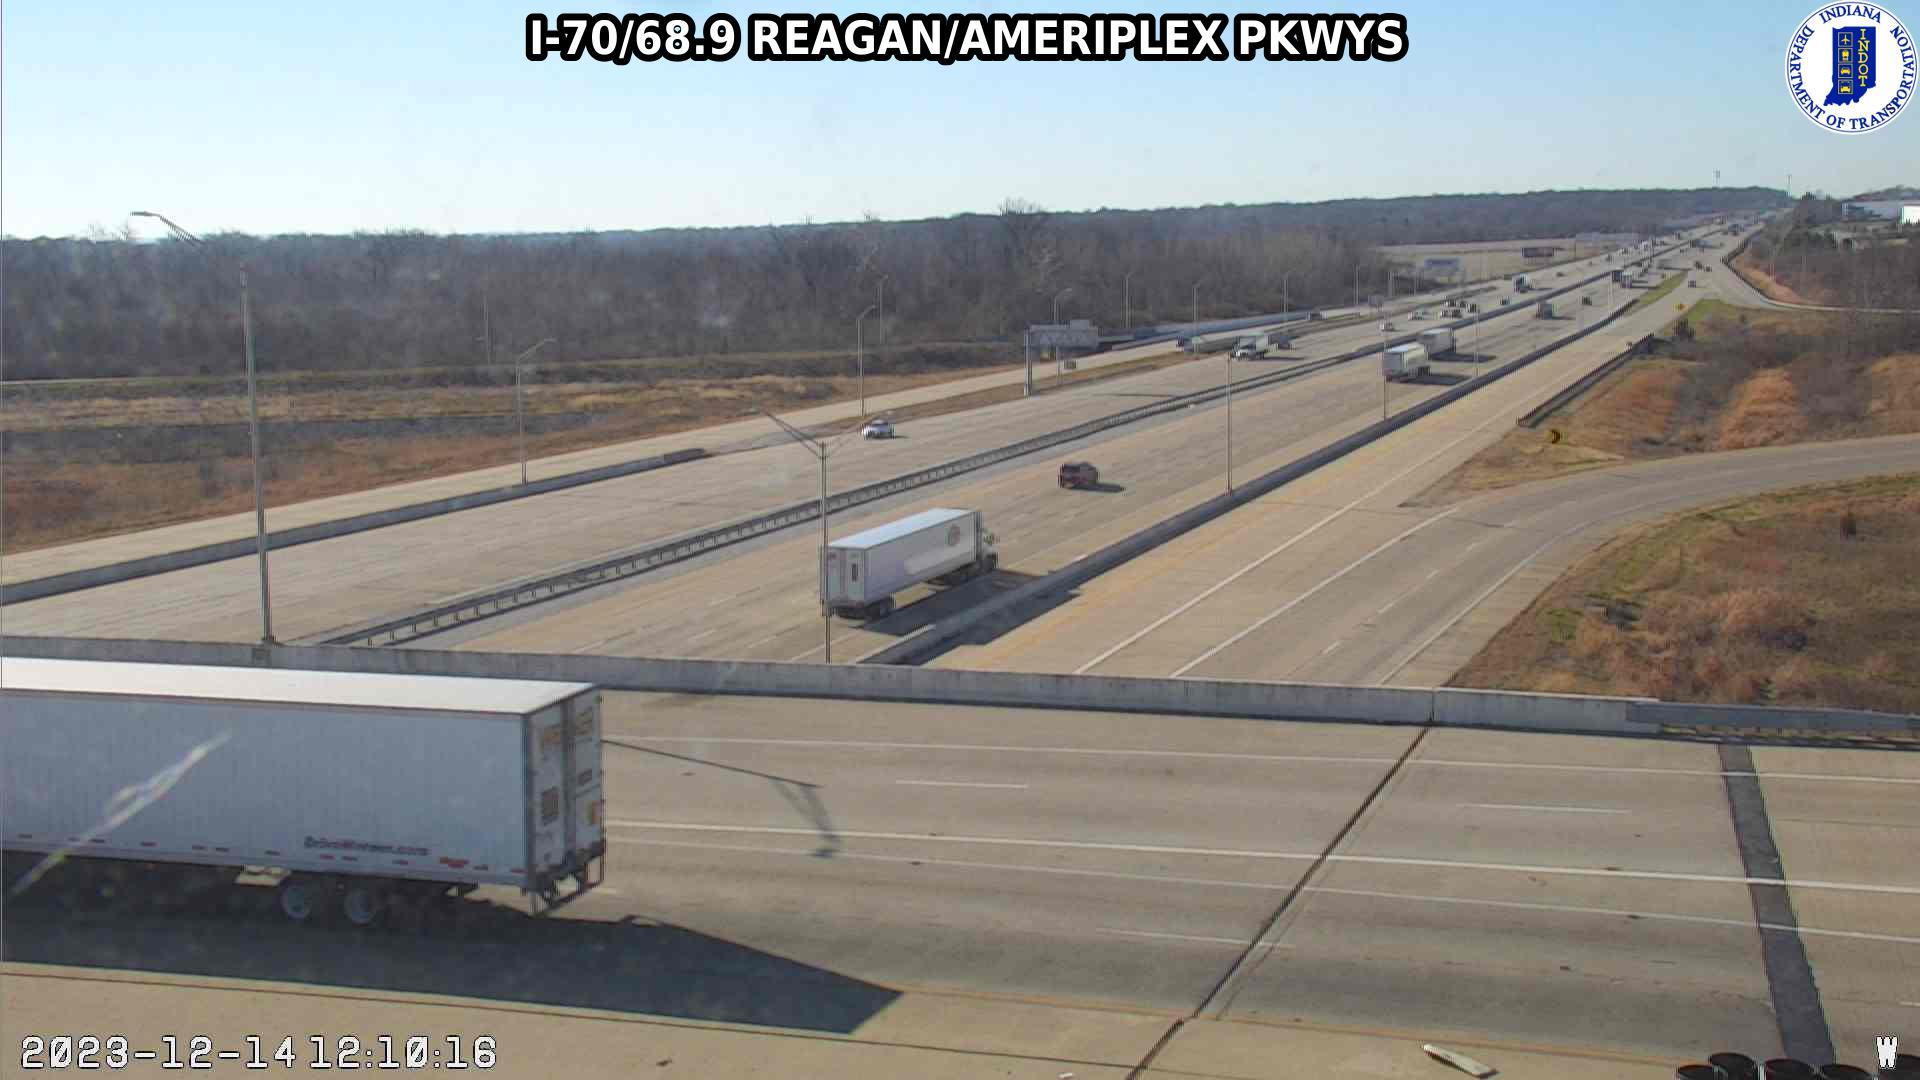 Plainfield: I-70: I-70/68.9 REAGAN/AMERIPLEX PKWYS Traffic Camera